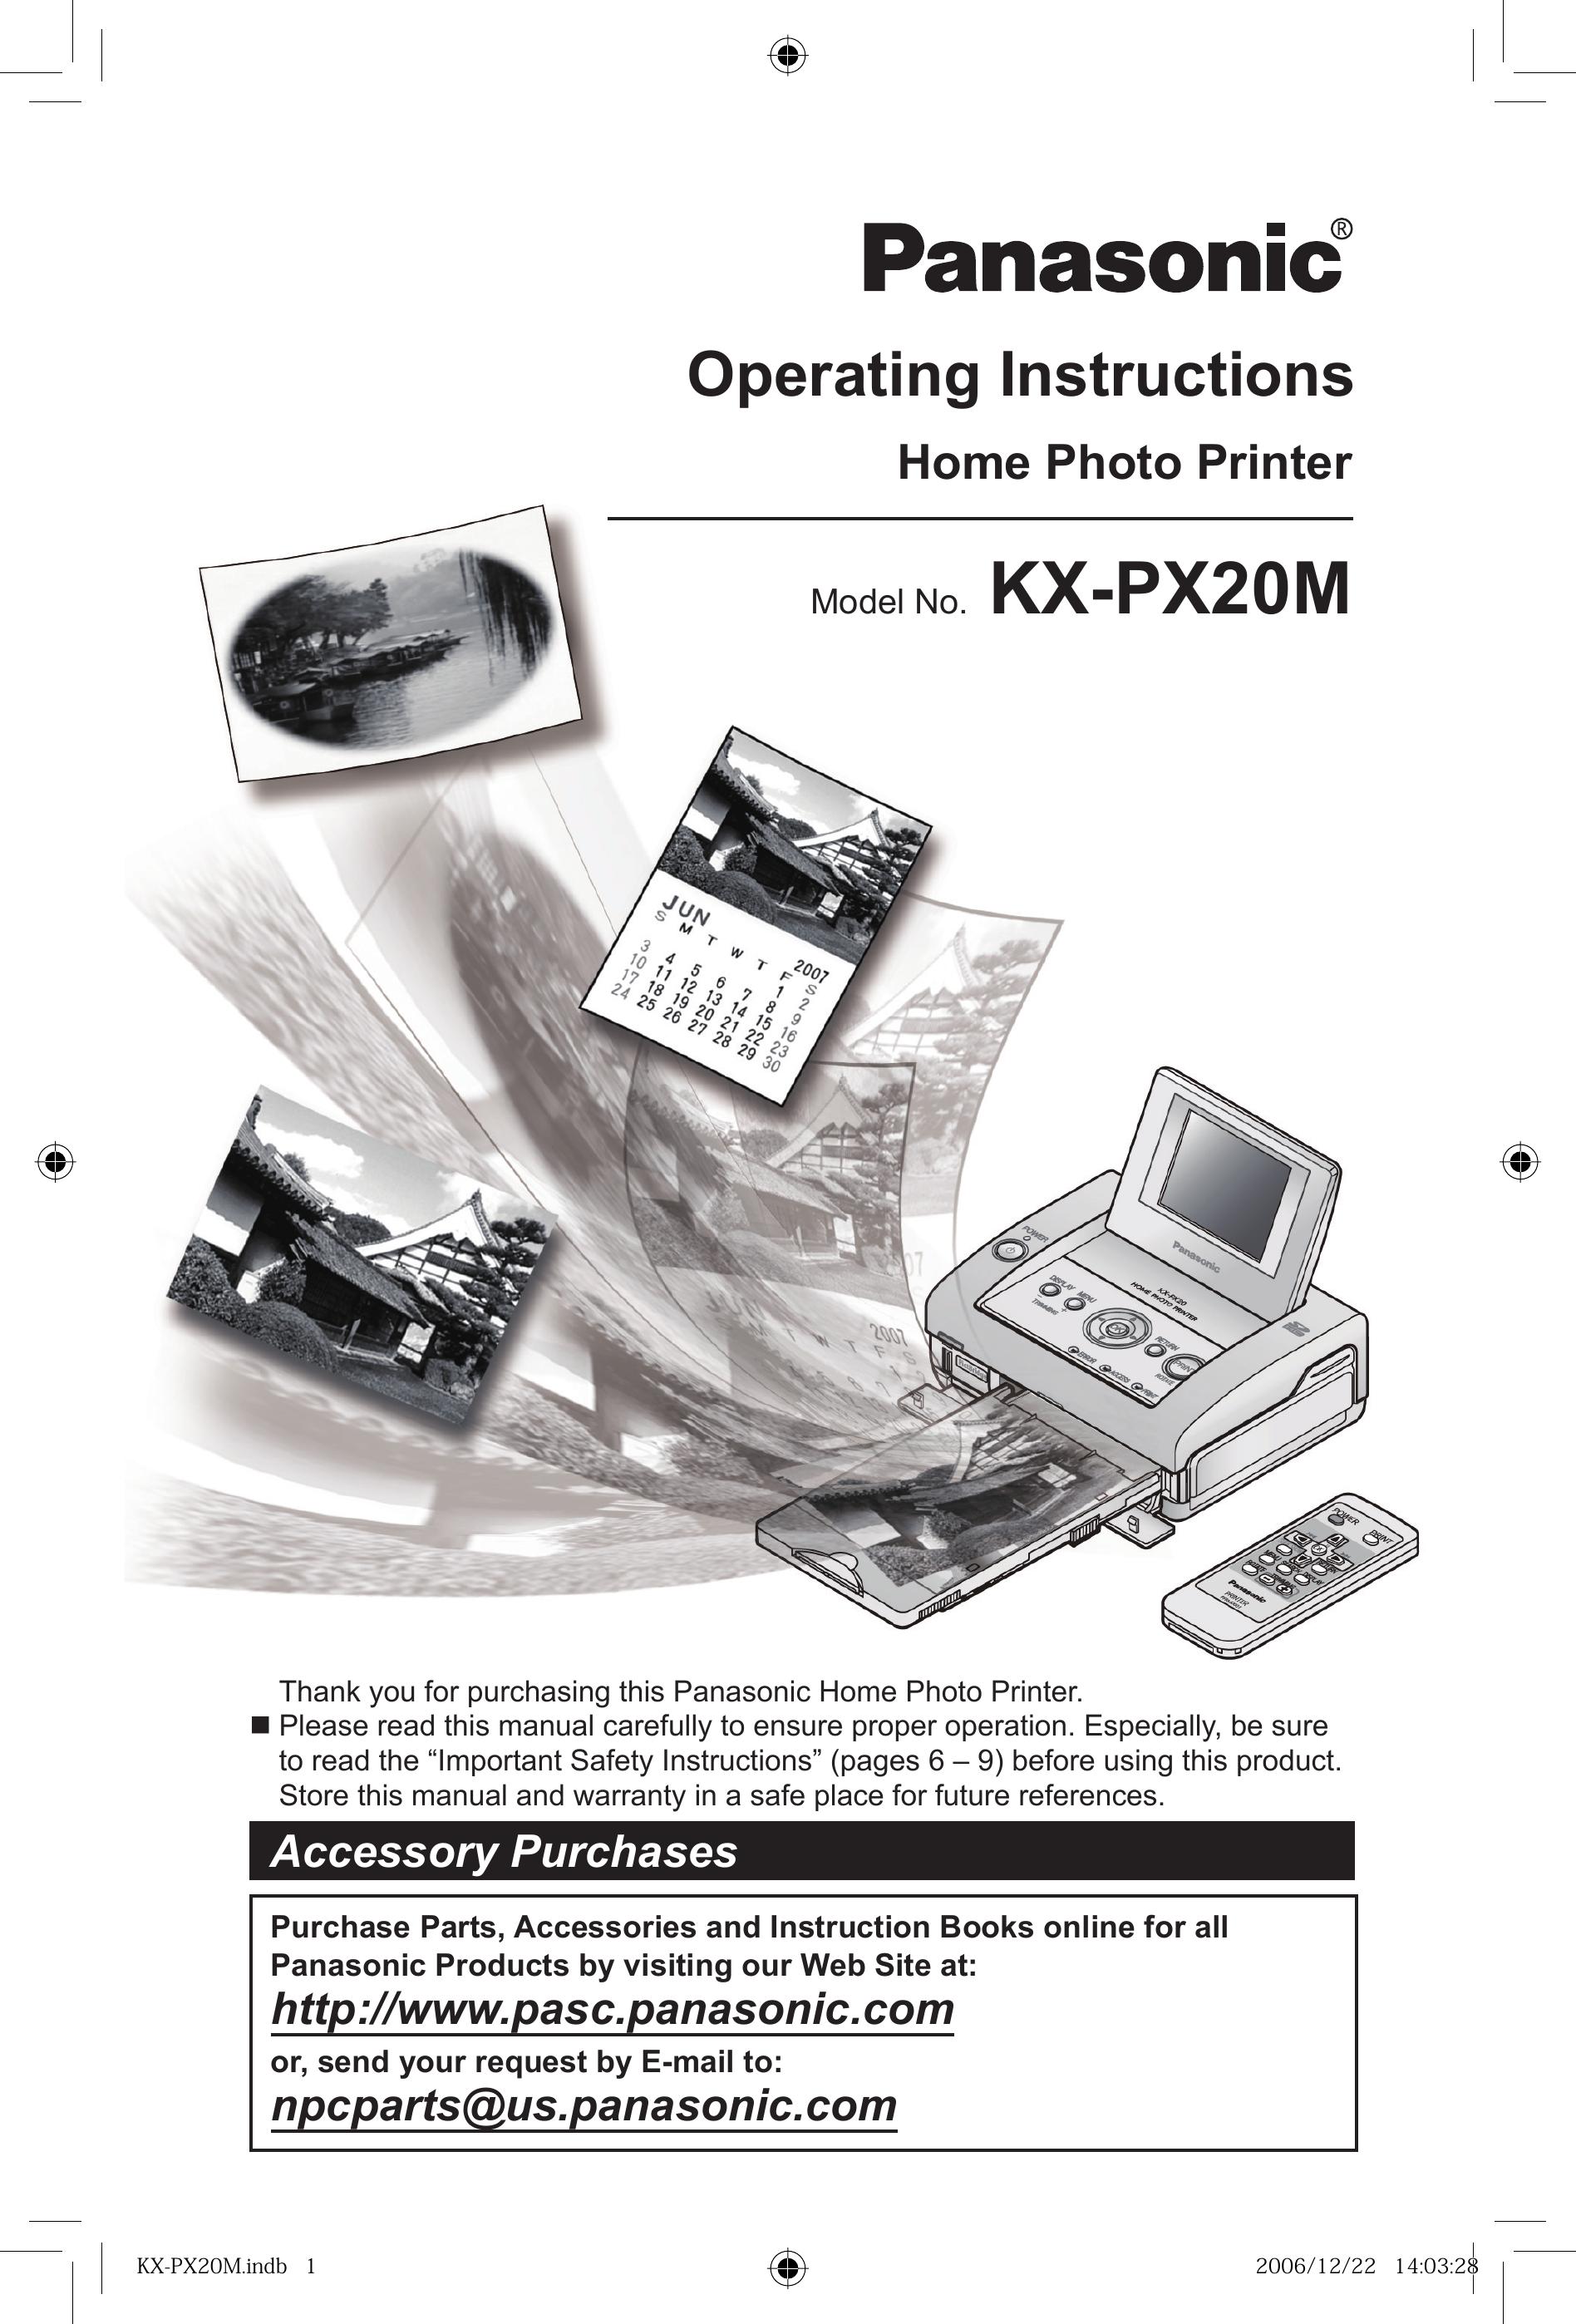 Panasonic KX-PX20M Photo Printer User Manual